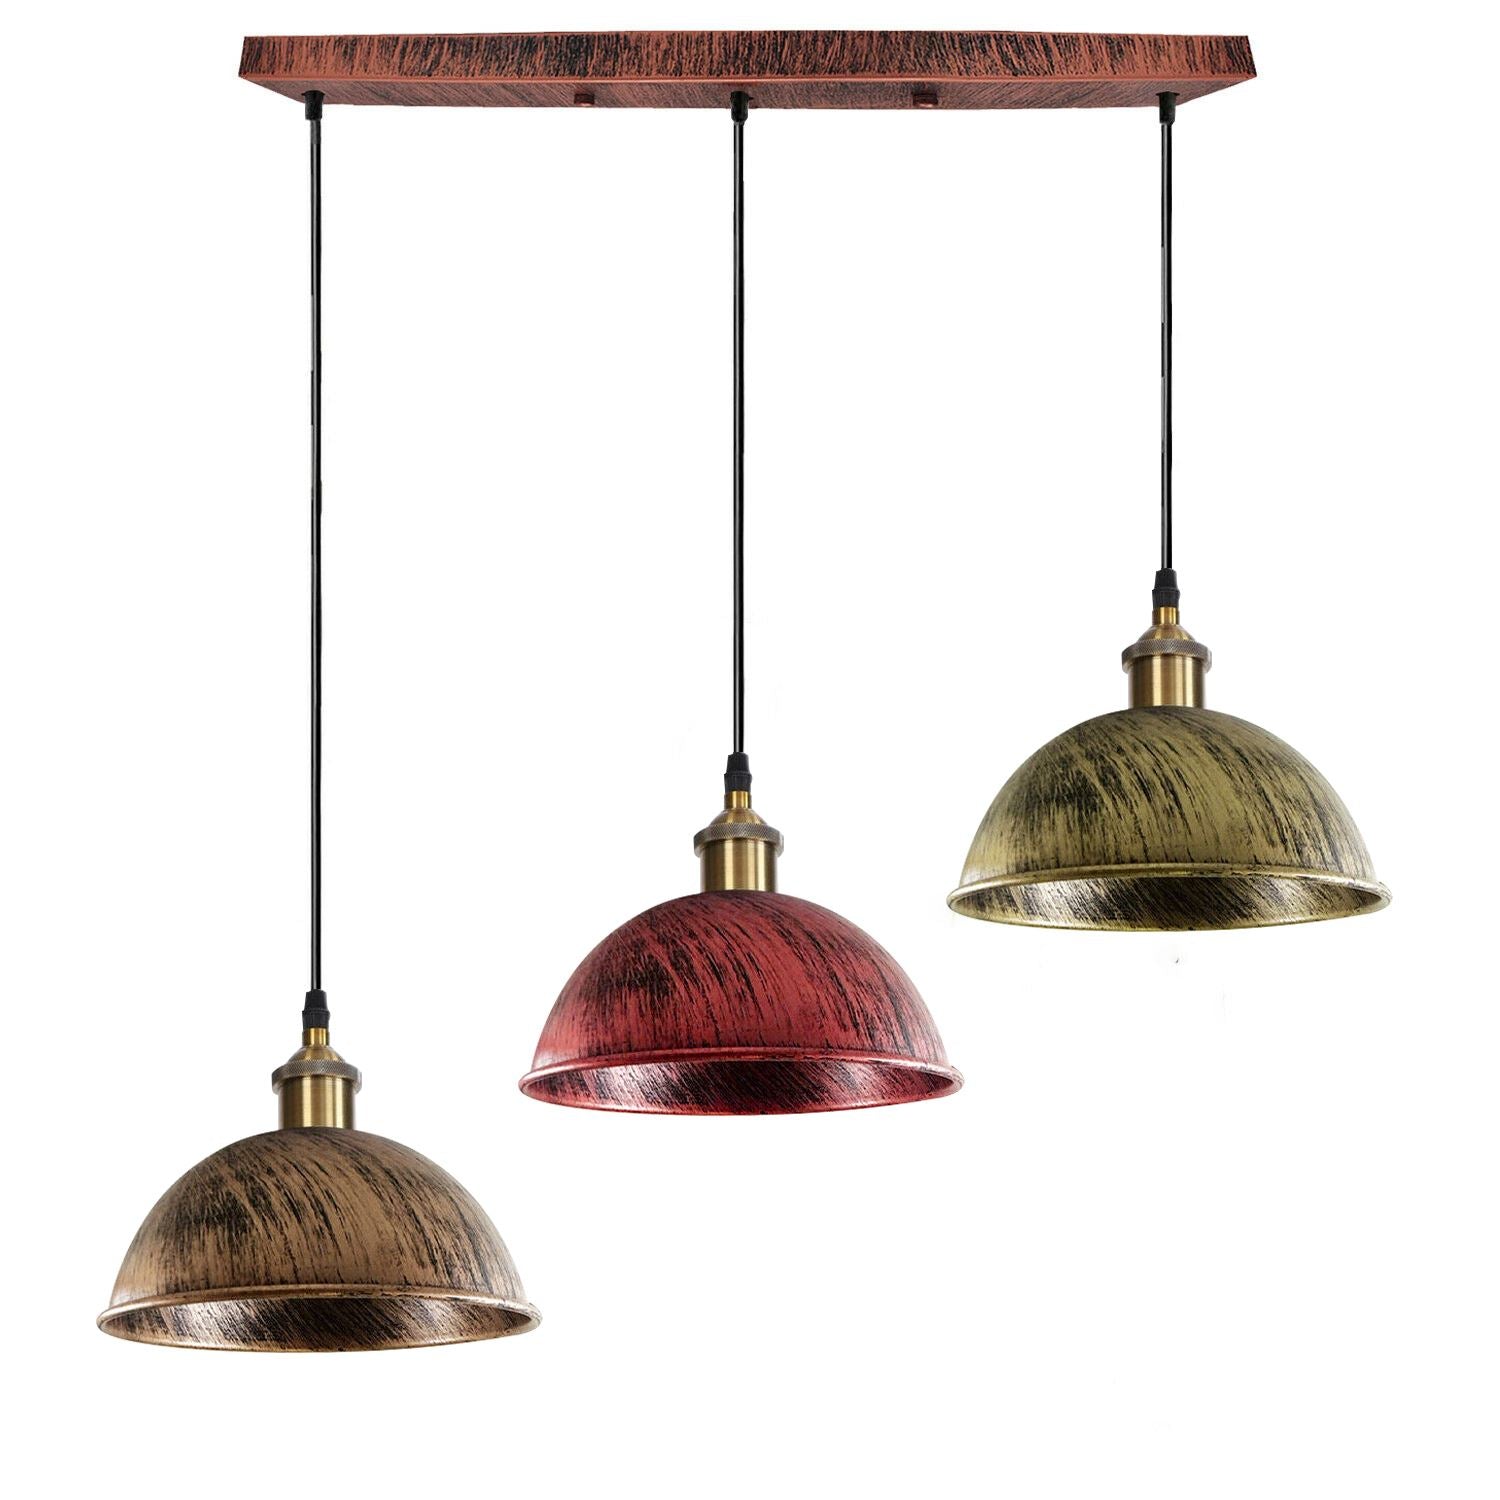  3Head Dome Ceiling Pendant Lamp Shade Light Kit